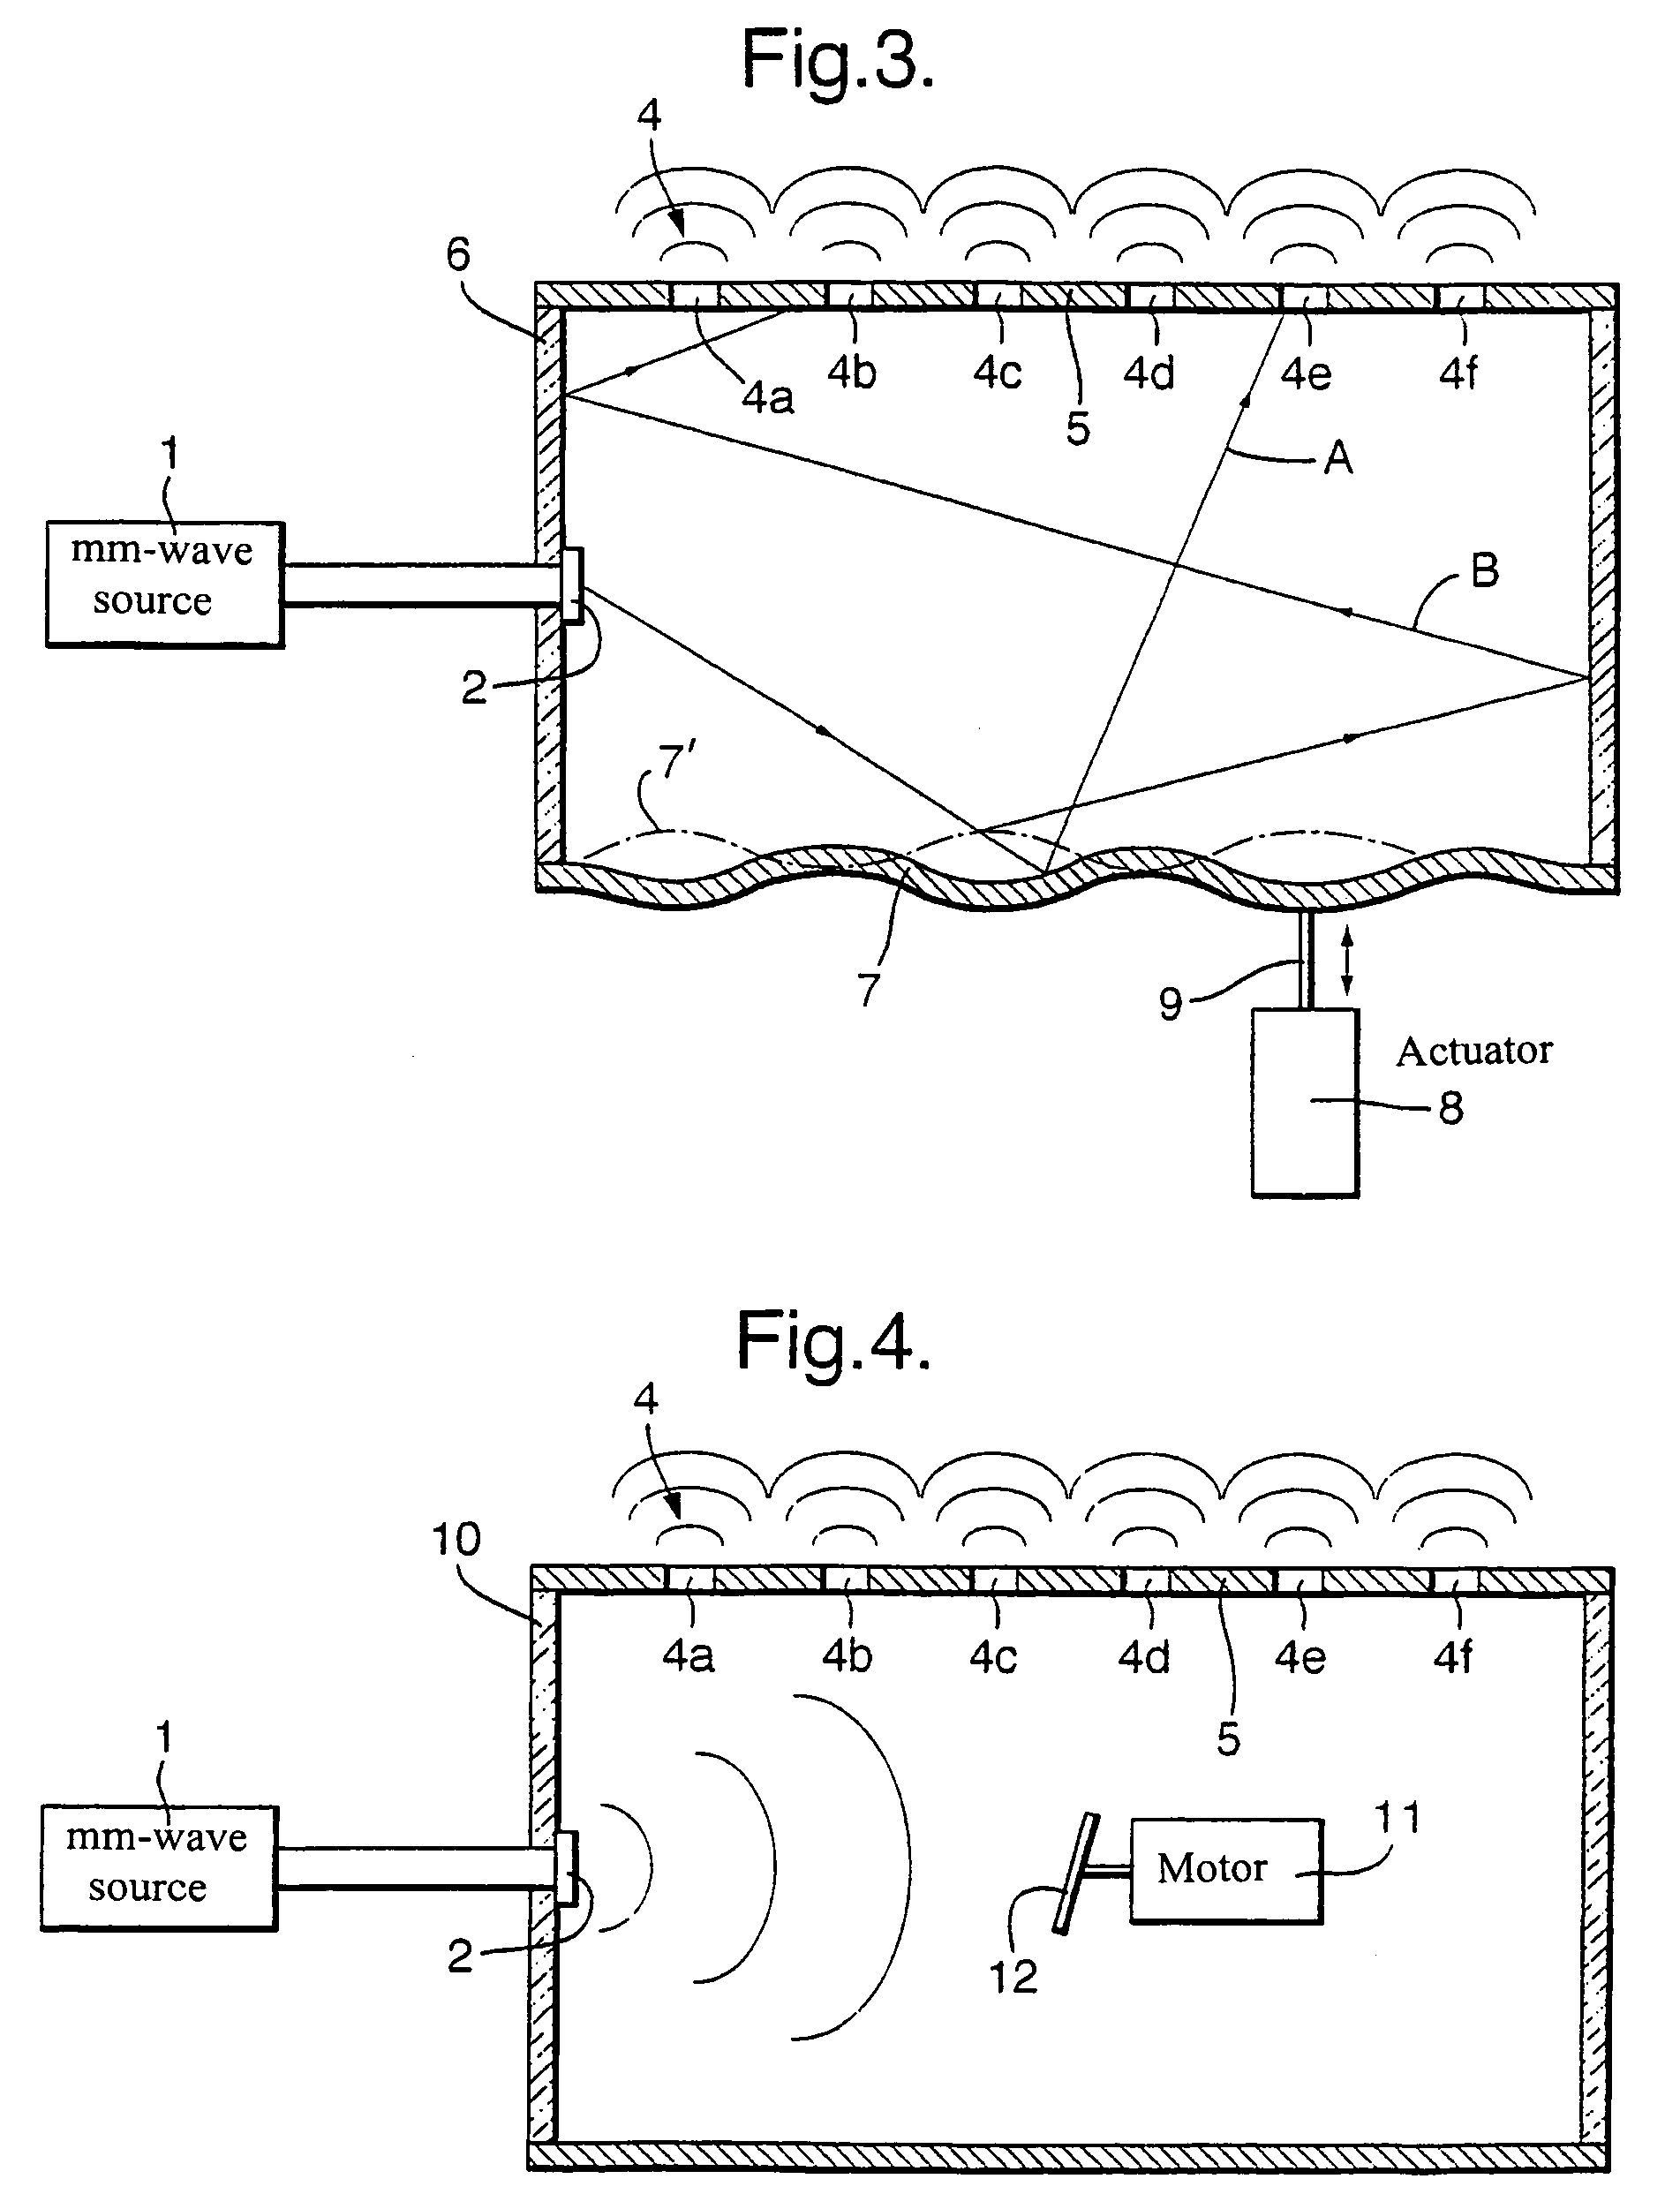 Millimetre and sub-millimetre wave illumination system